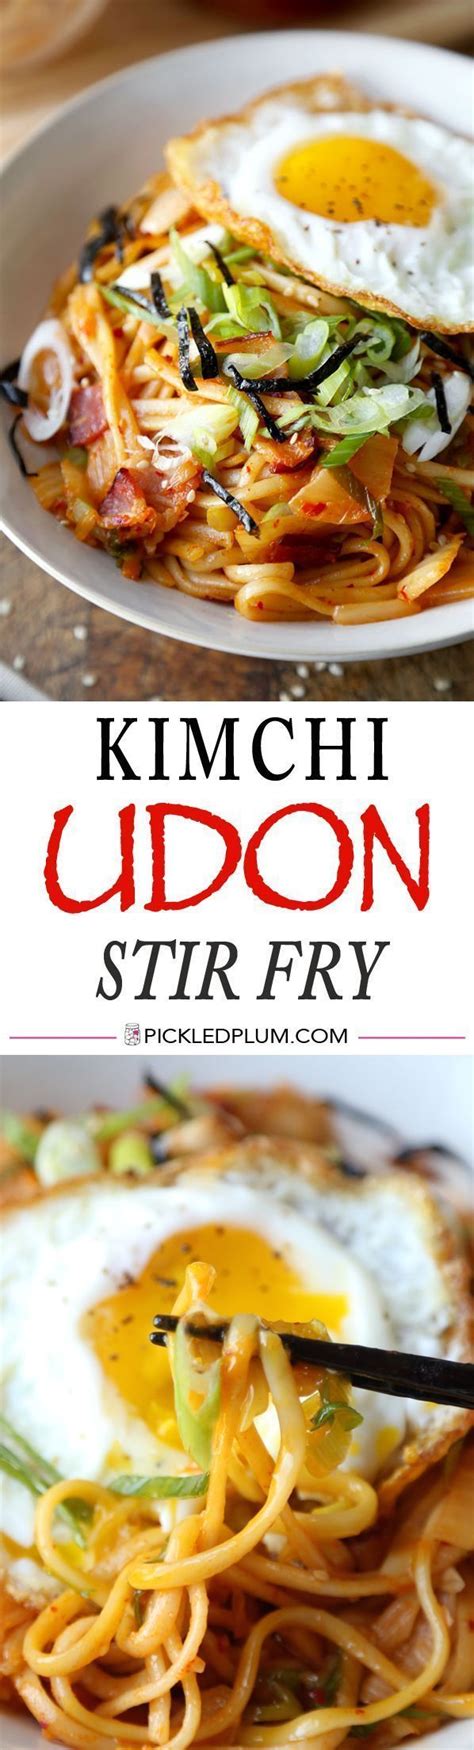 Kimchi Udon Stir Fry Recipe Asian Recipes Asian Cooking Food Recipes